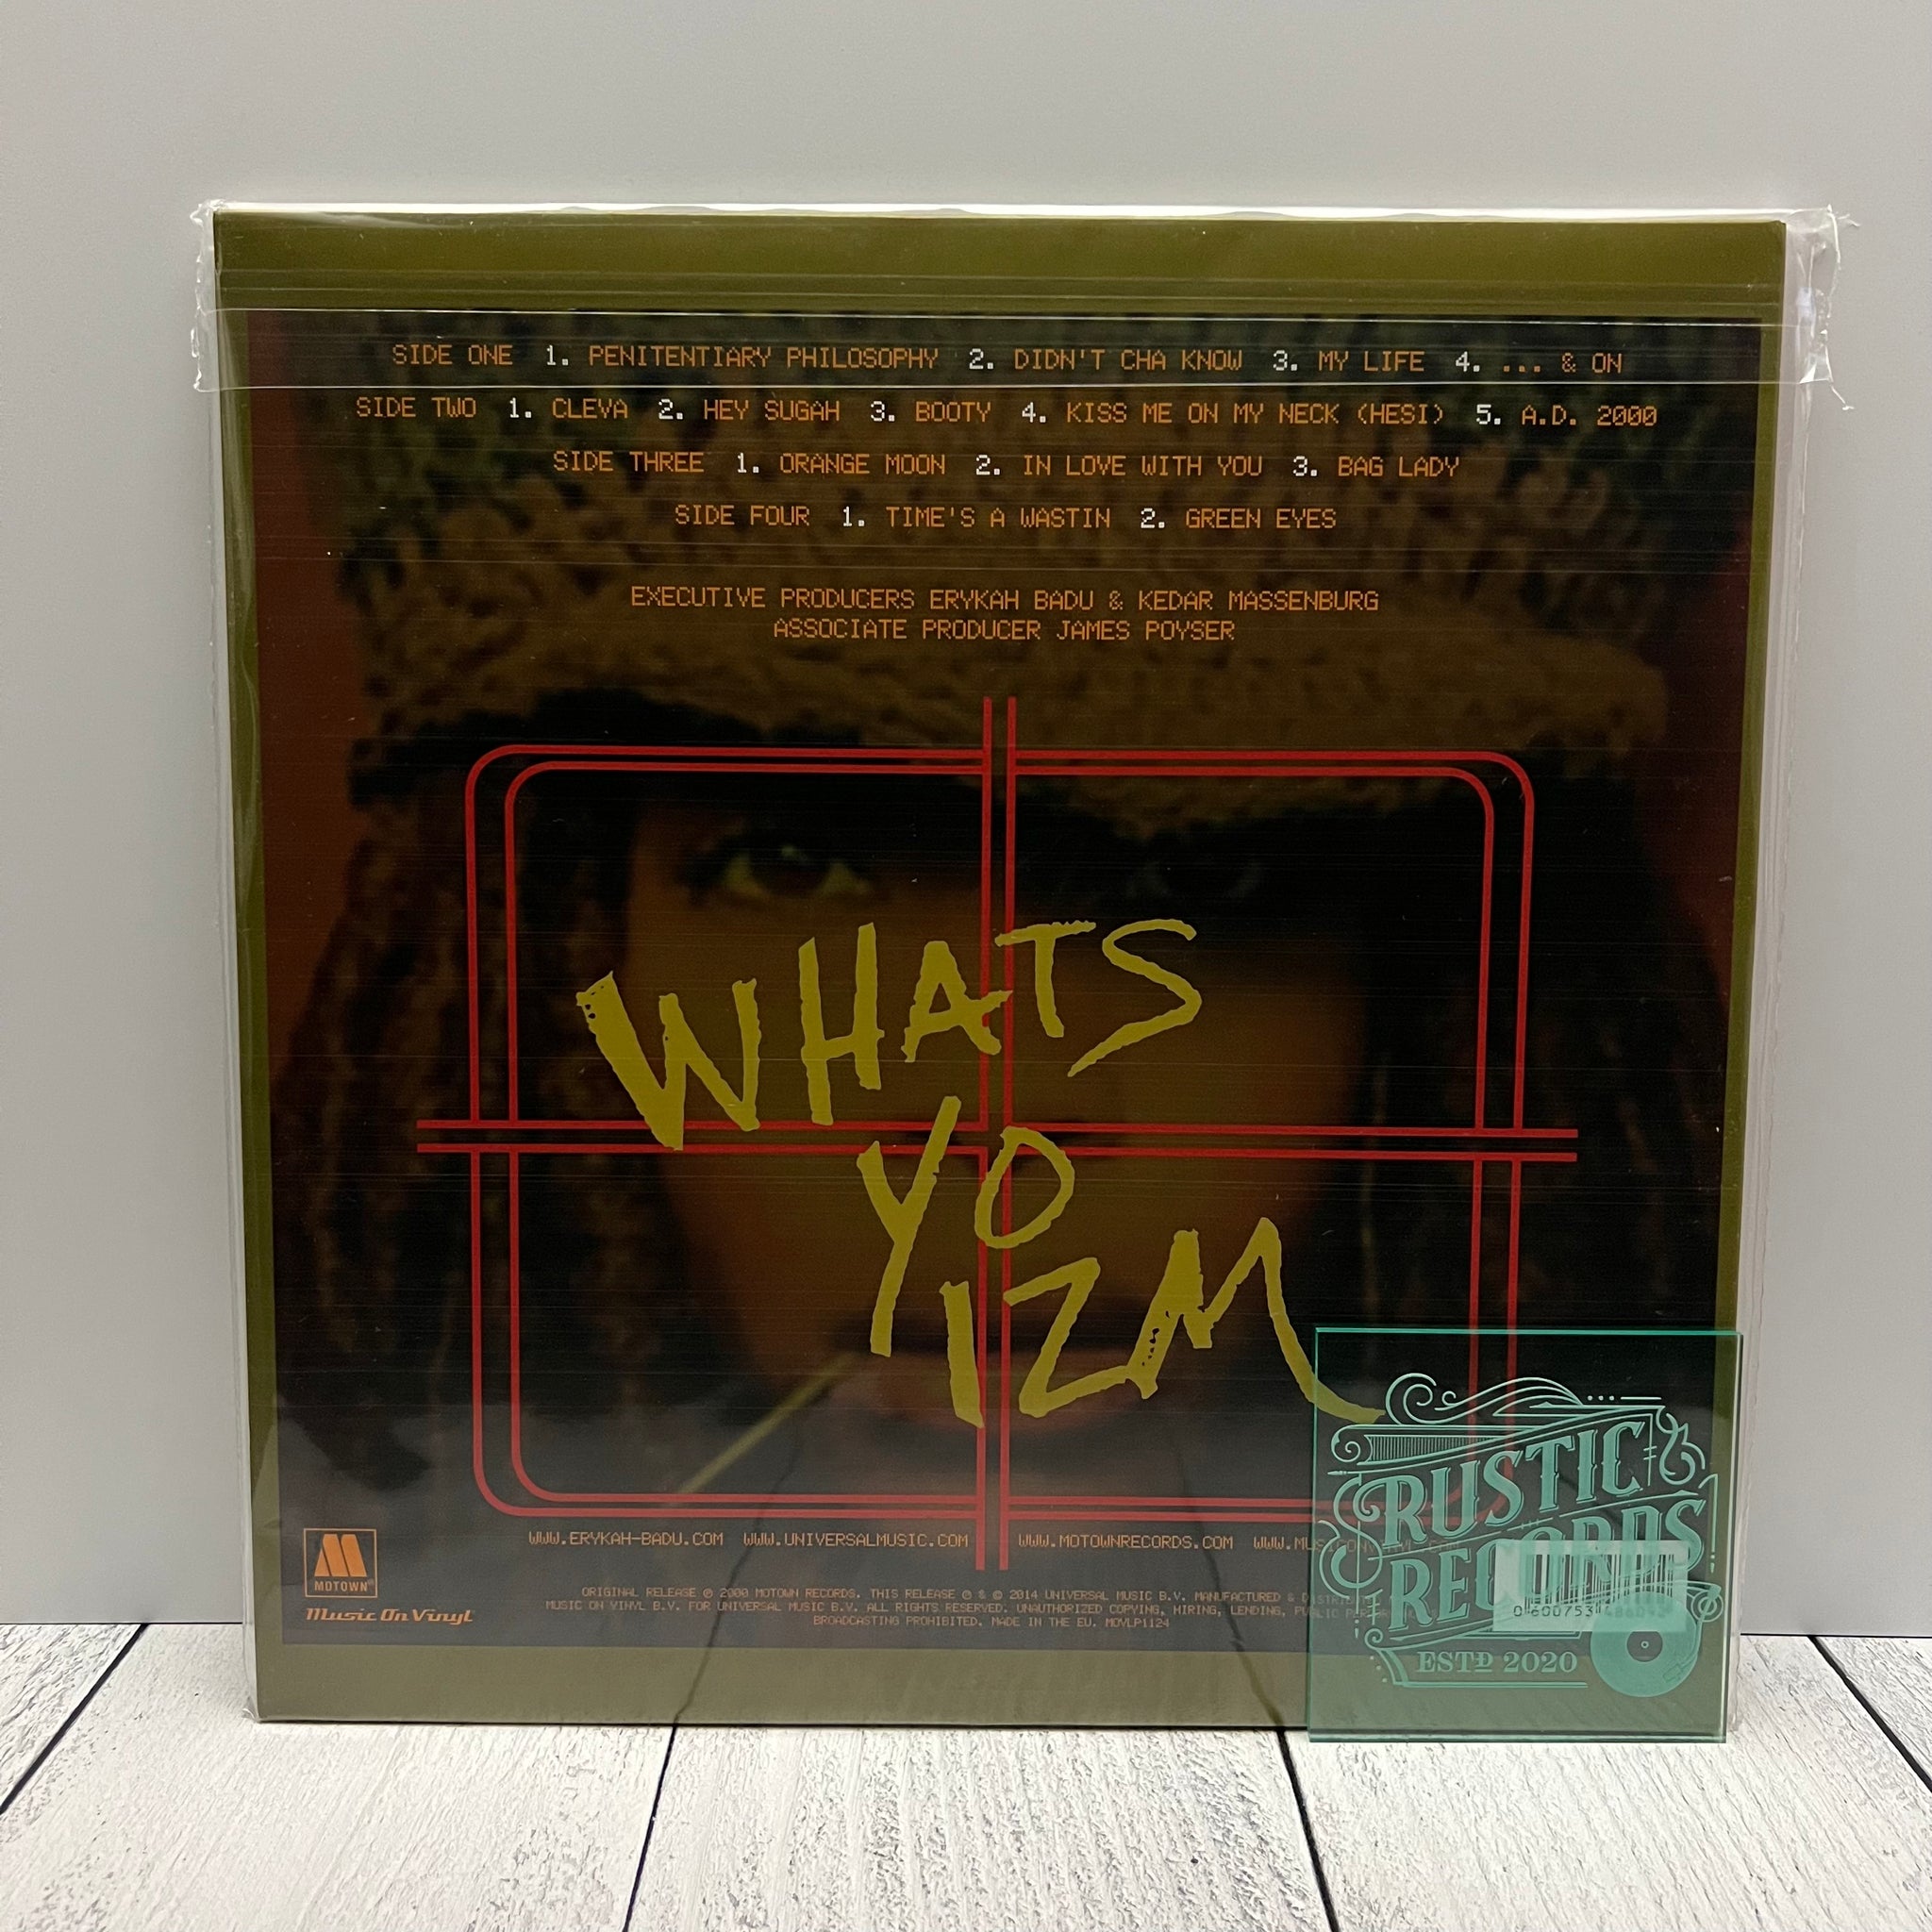 Erykah Badu - Mama's Gun (Music On Vinyl)